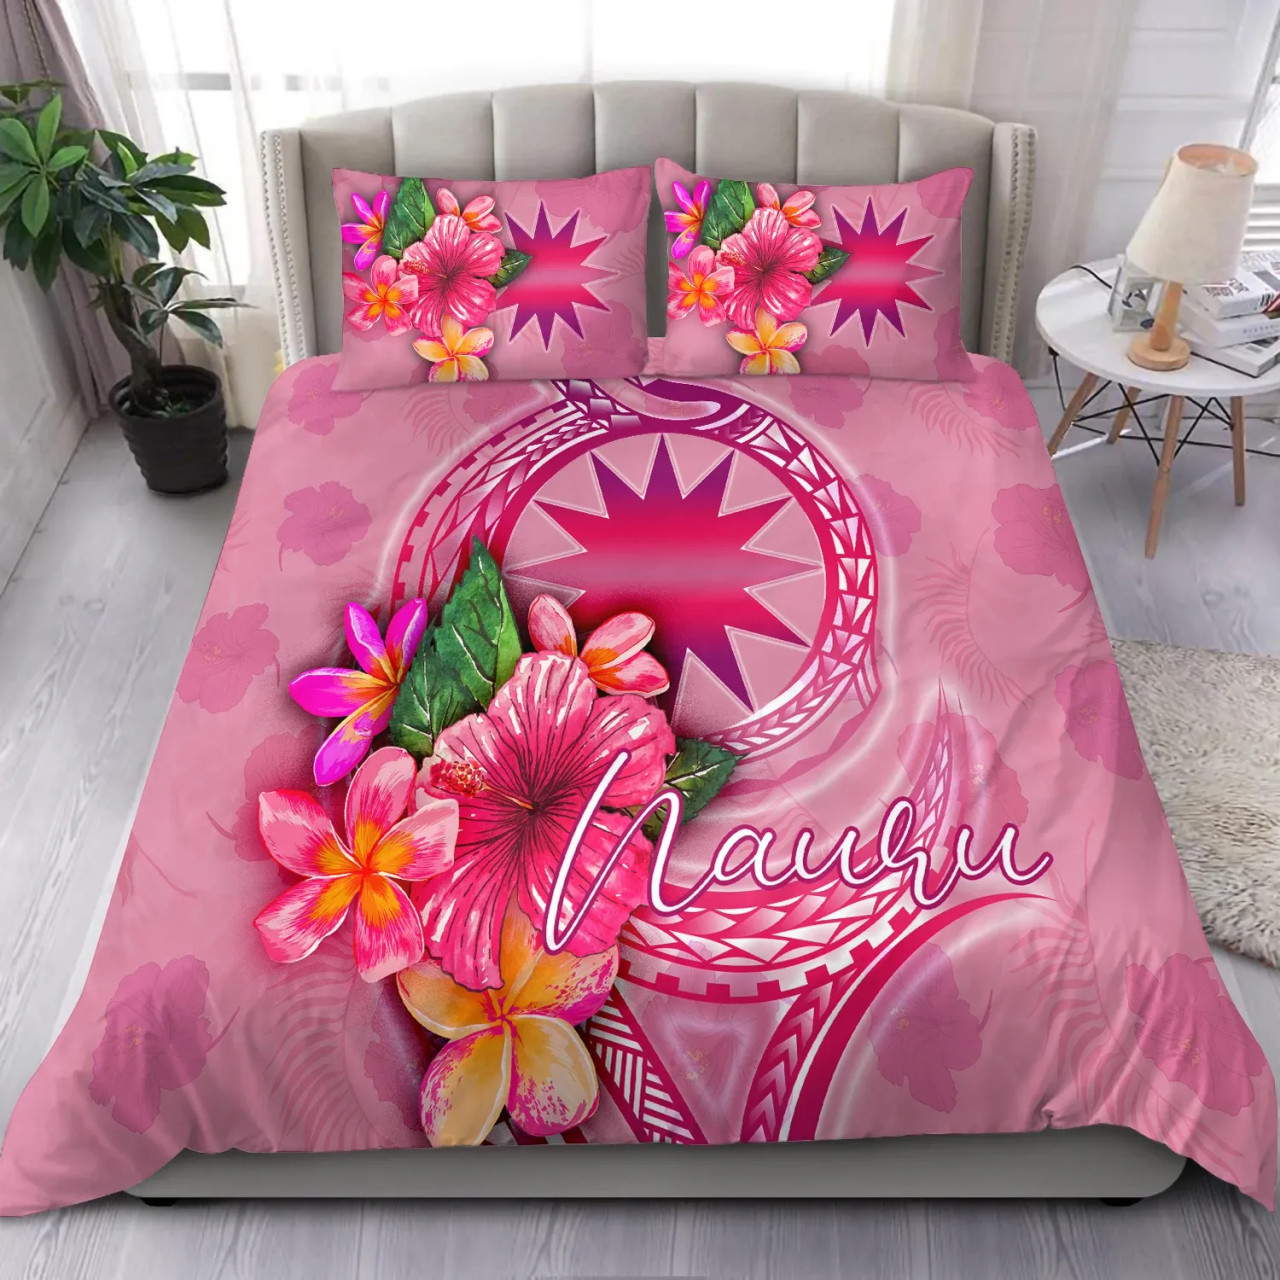 Nauru Polynesian Bedding Set - Floral With Seal Pink 1